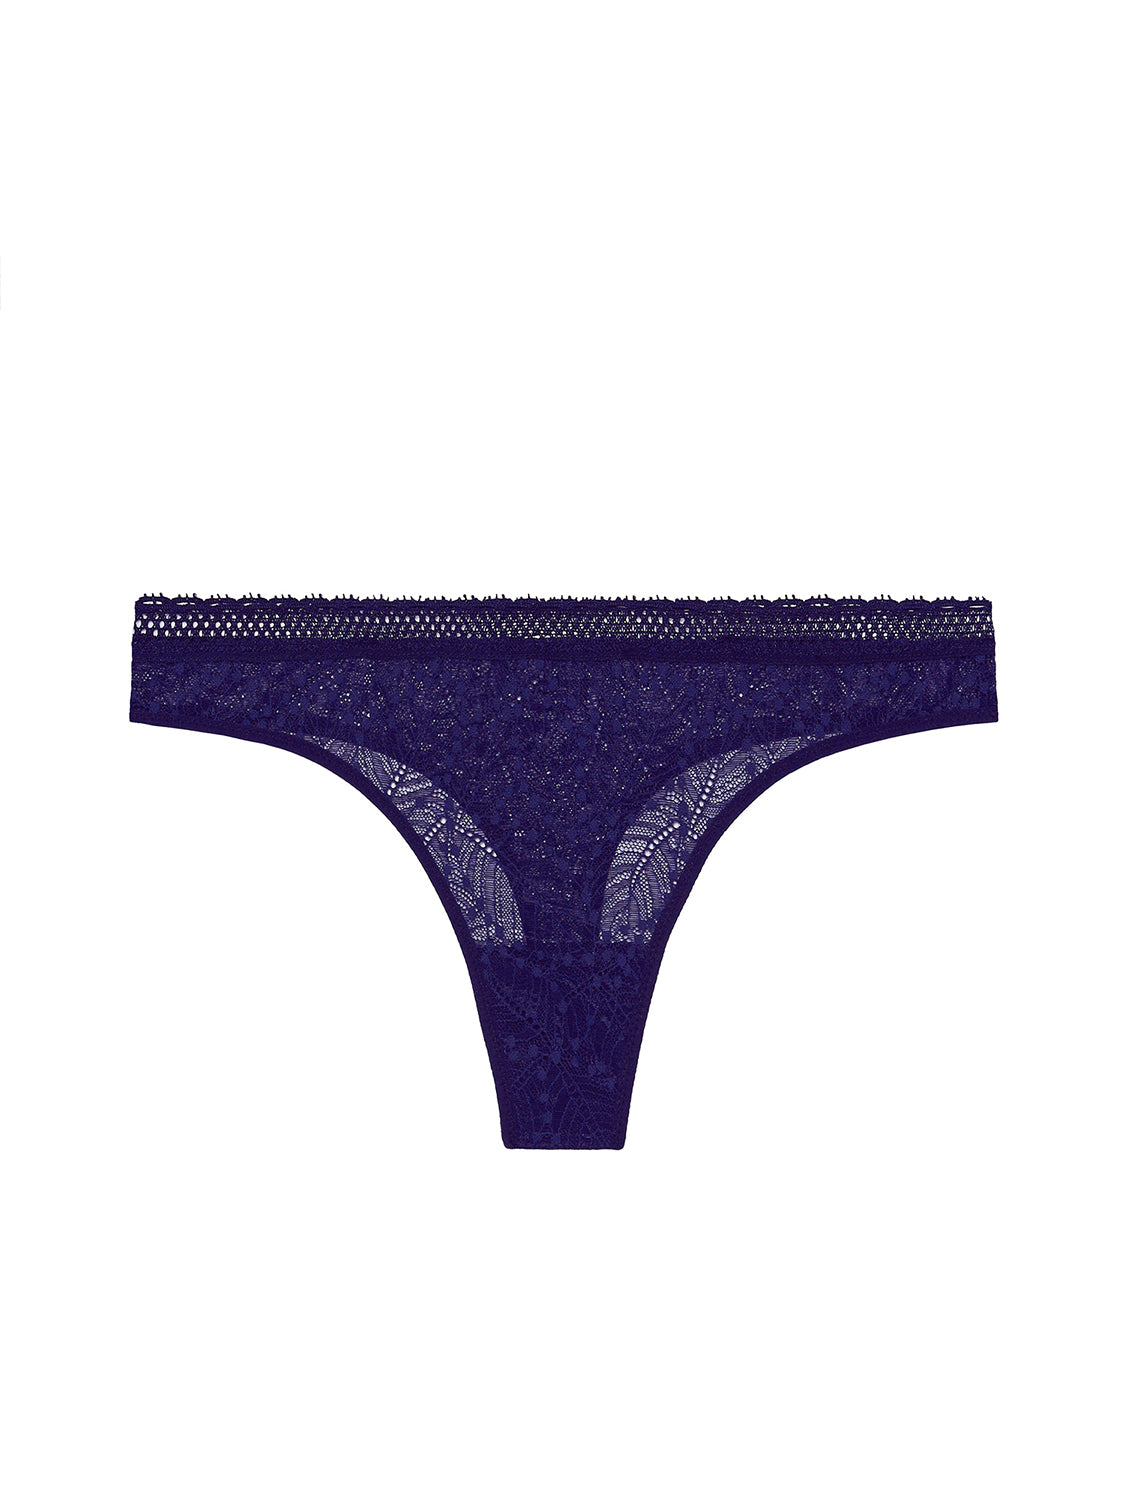 Triumph Underwear 3 Hook Bra Extender  Buy Simone Perele Panties Online –  Studio Europe